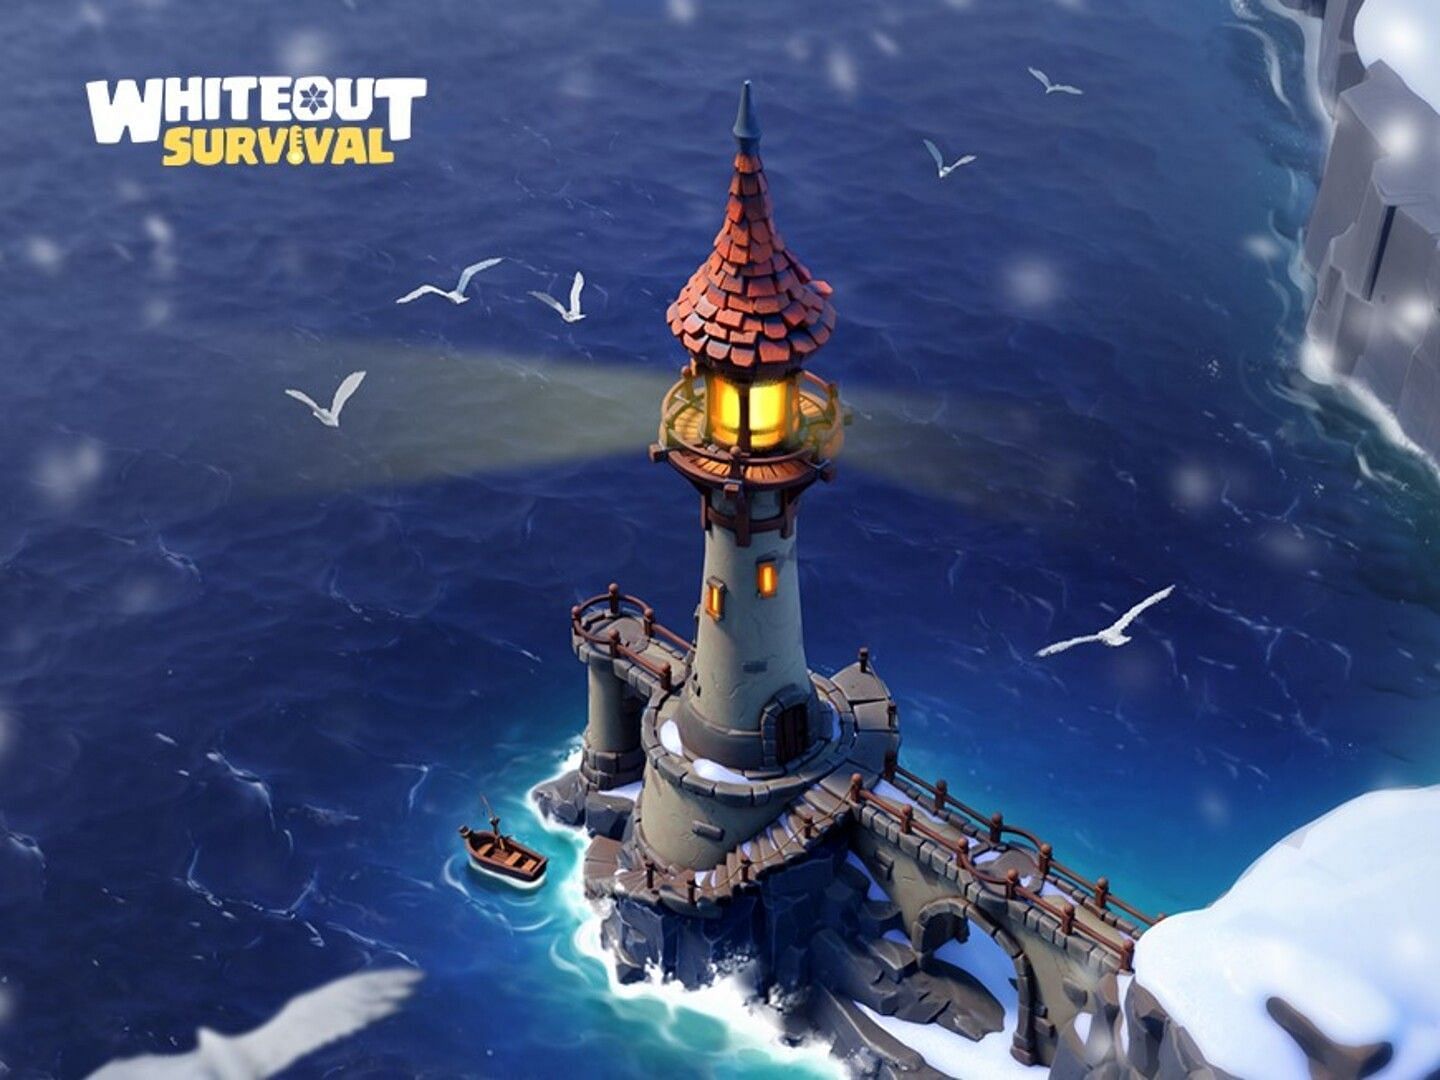 Daybreak Island within the game (Image via Century Games)